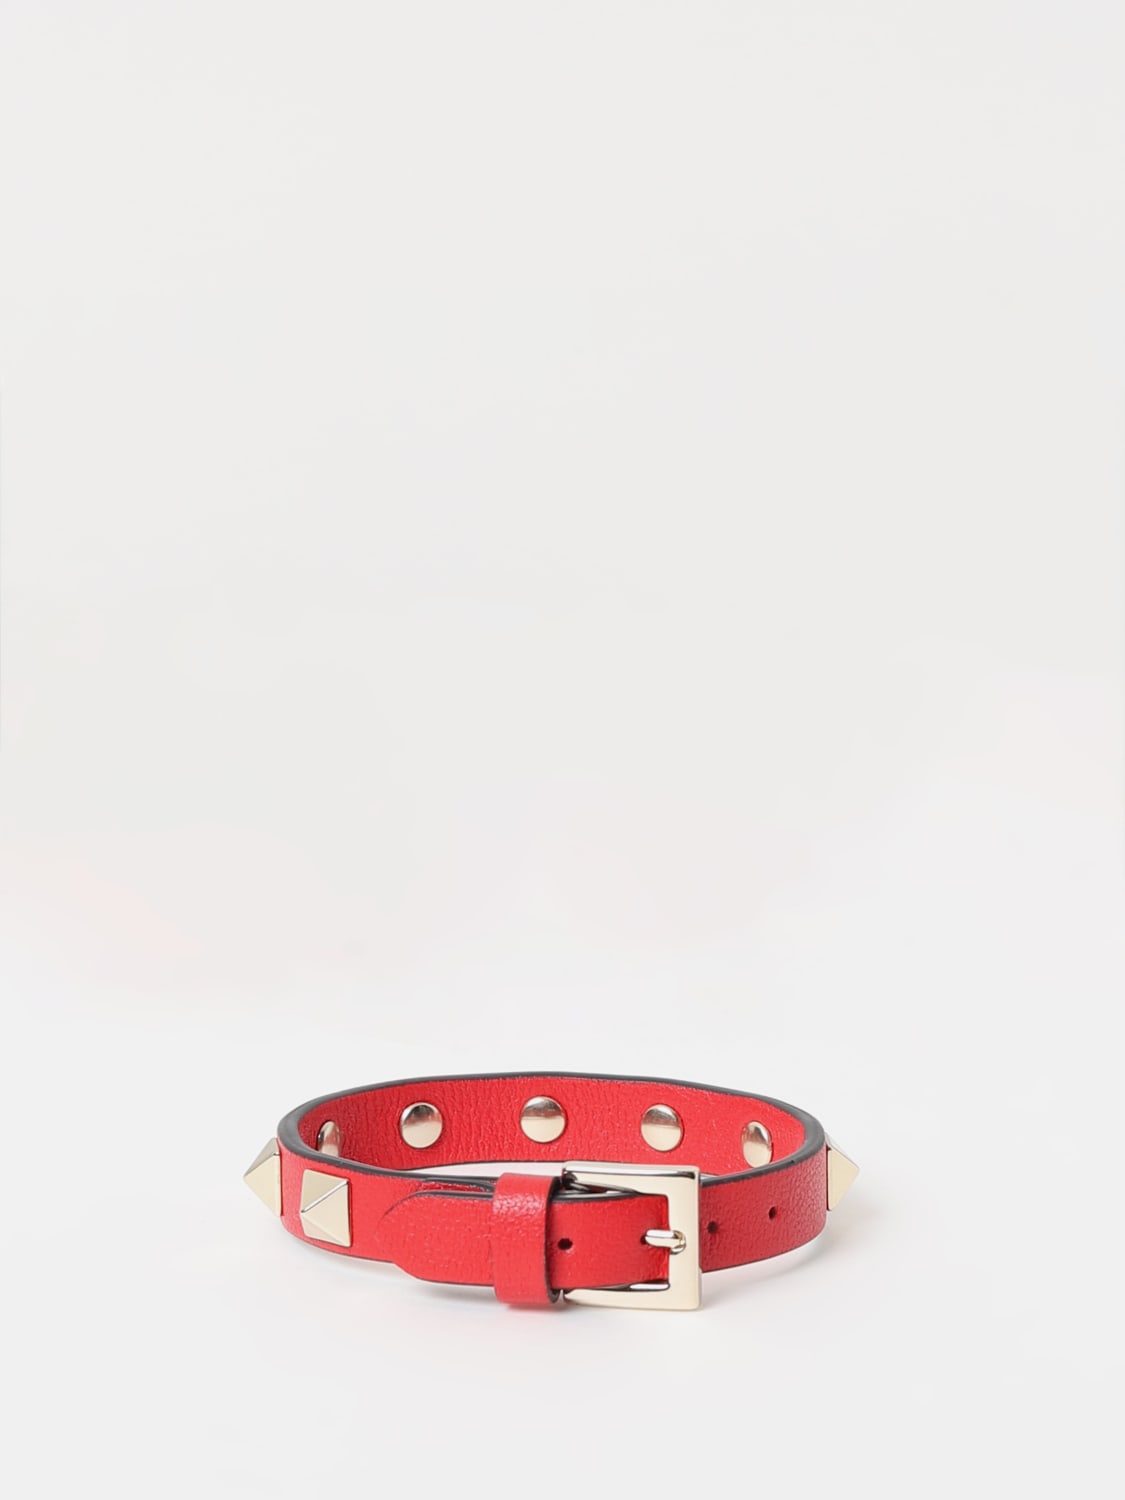 VALENTINO GARAVANI: Rockstud leather bracelet - Red